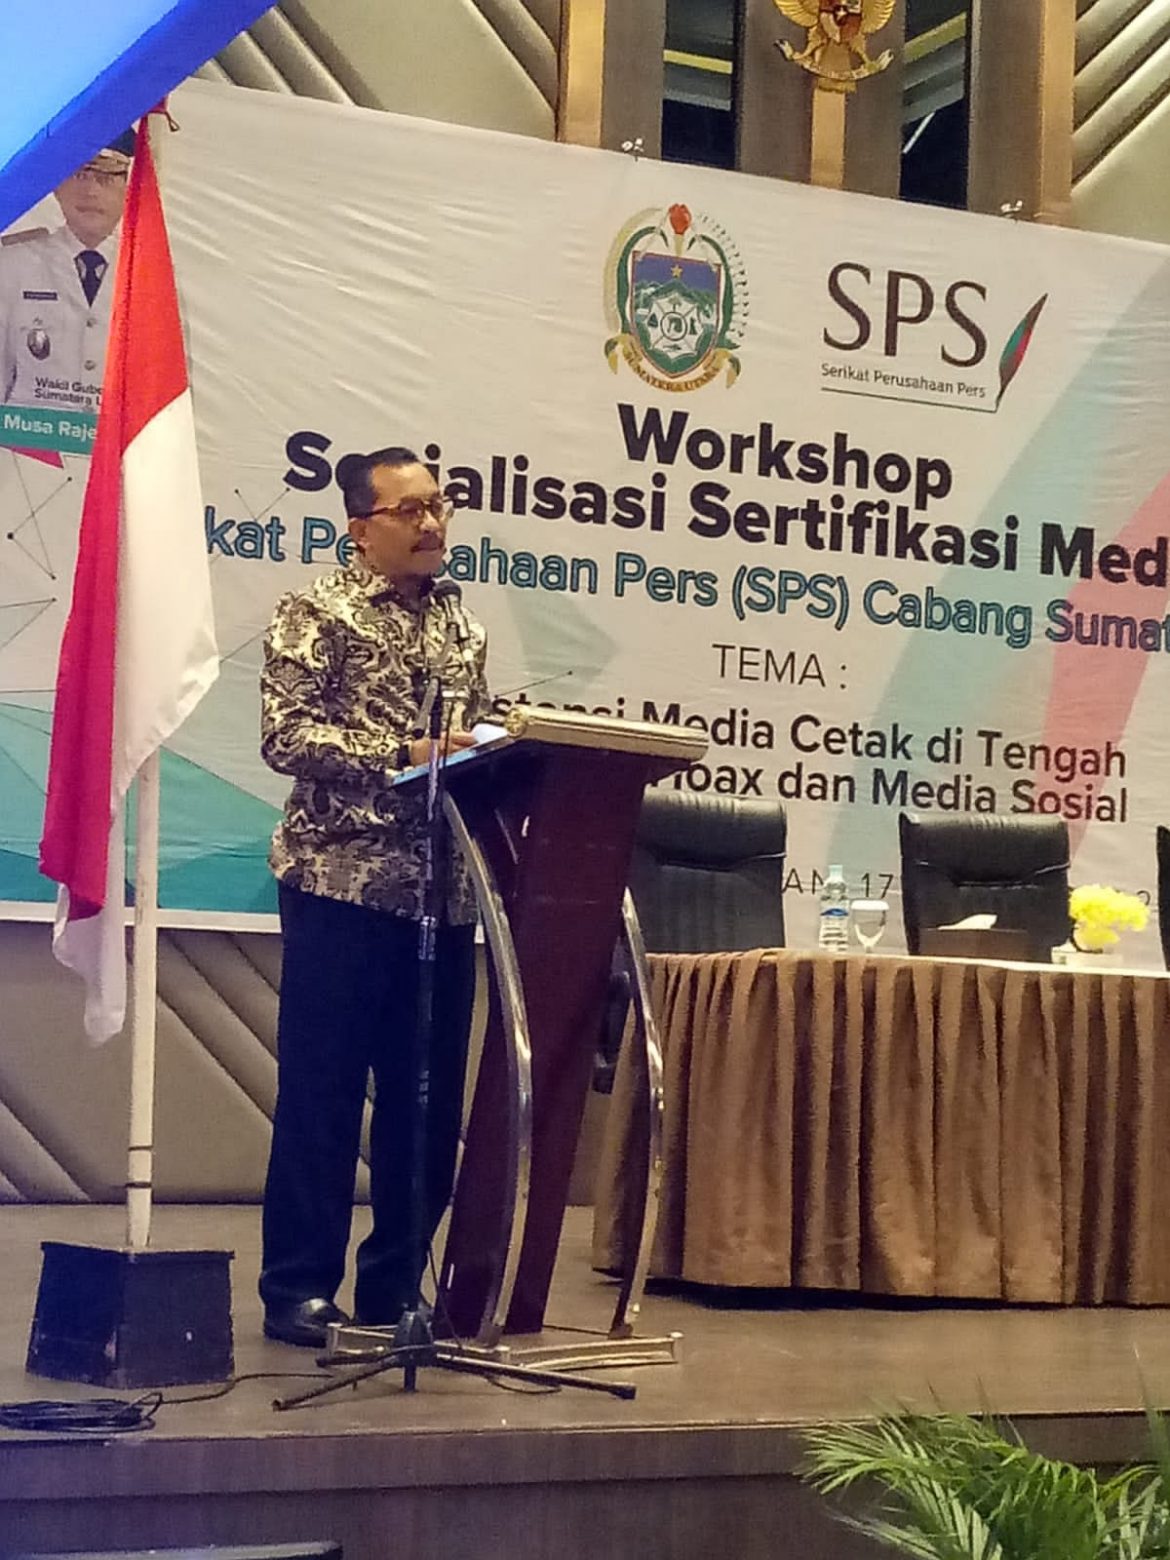 Workshop Standarisasi Media Cetak Diharapkan Dapat Wujudkan Kemerdekaan Pers di Sumut.  Plt. Kadis Kominfo, Ilyas Buka Workshop SPS